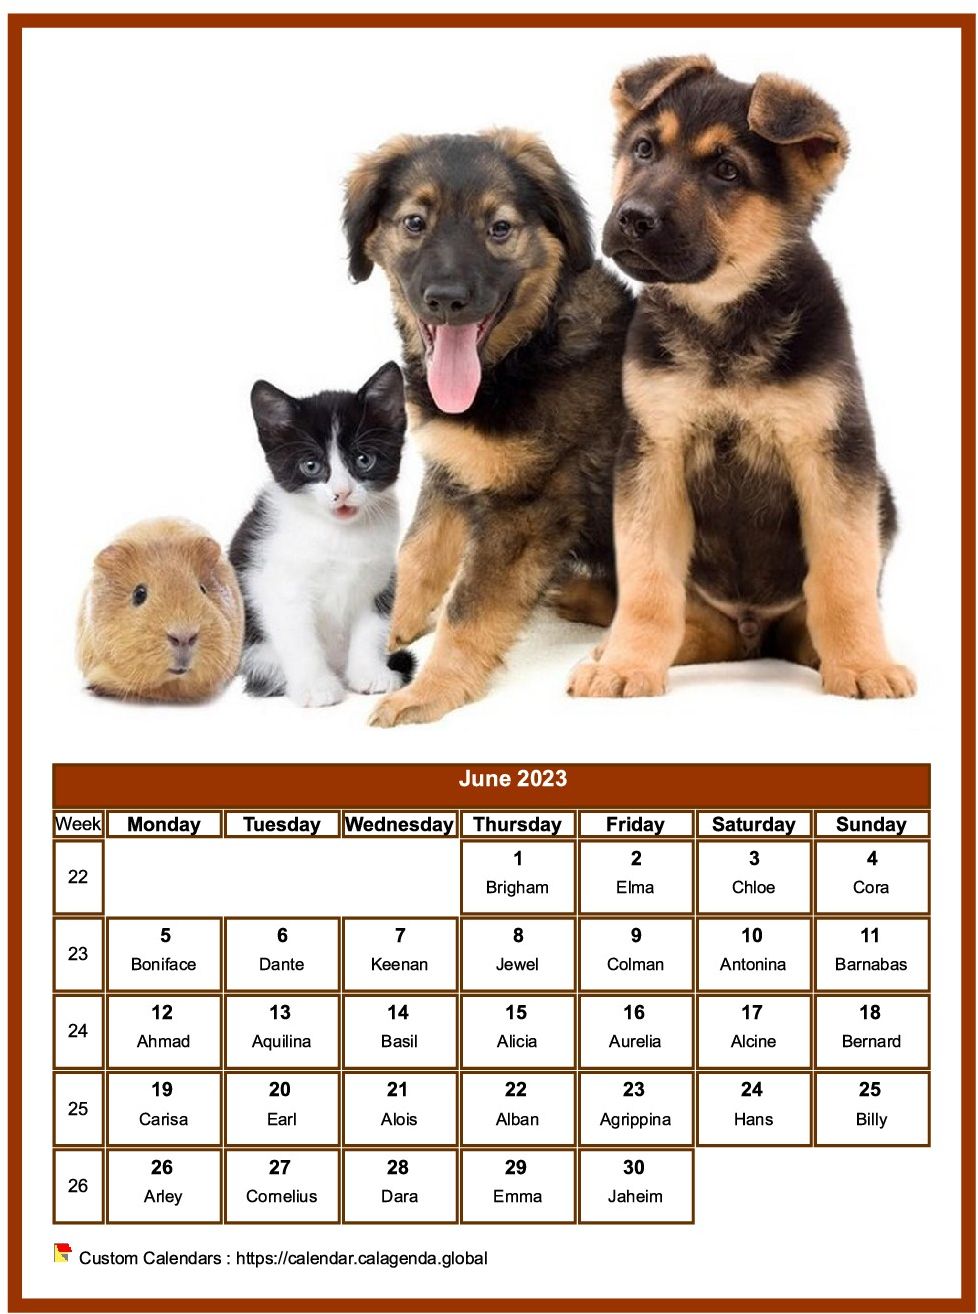 Calendar June 2023 dogs